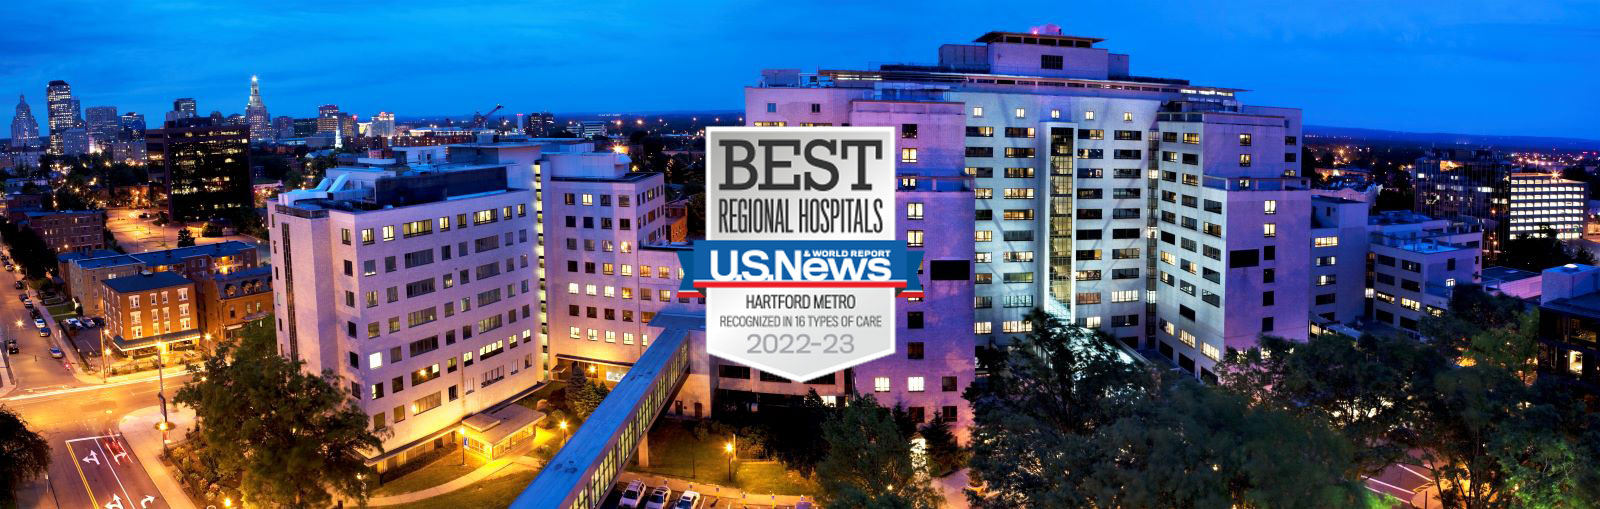 U.S. News & World Report Rates Hartford Hospital Best in Hartford Metro Area